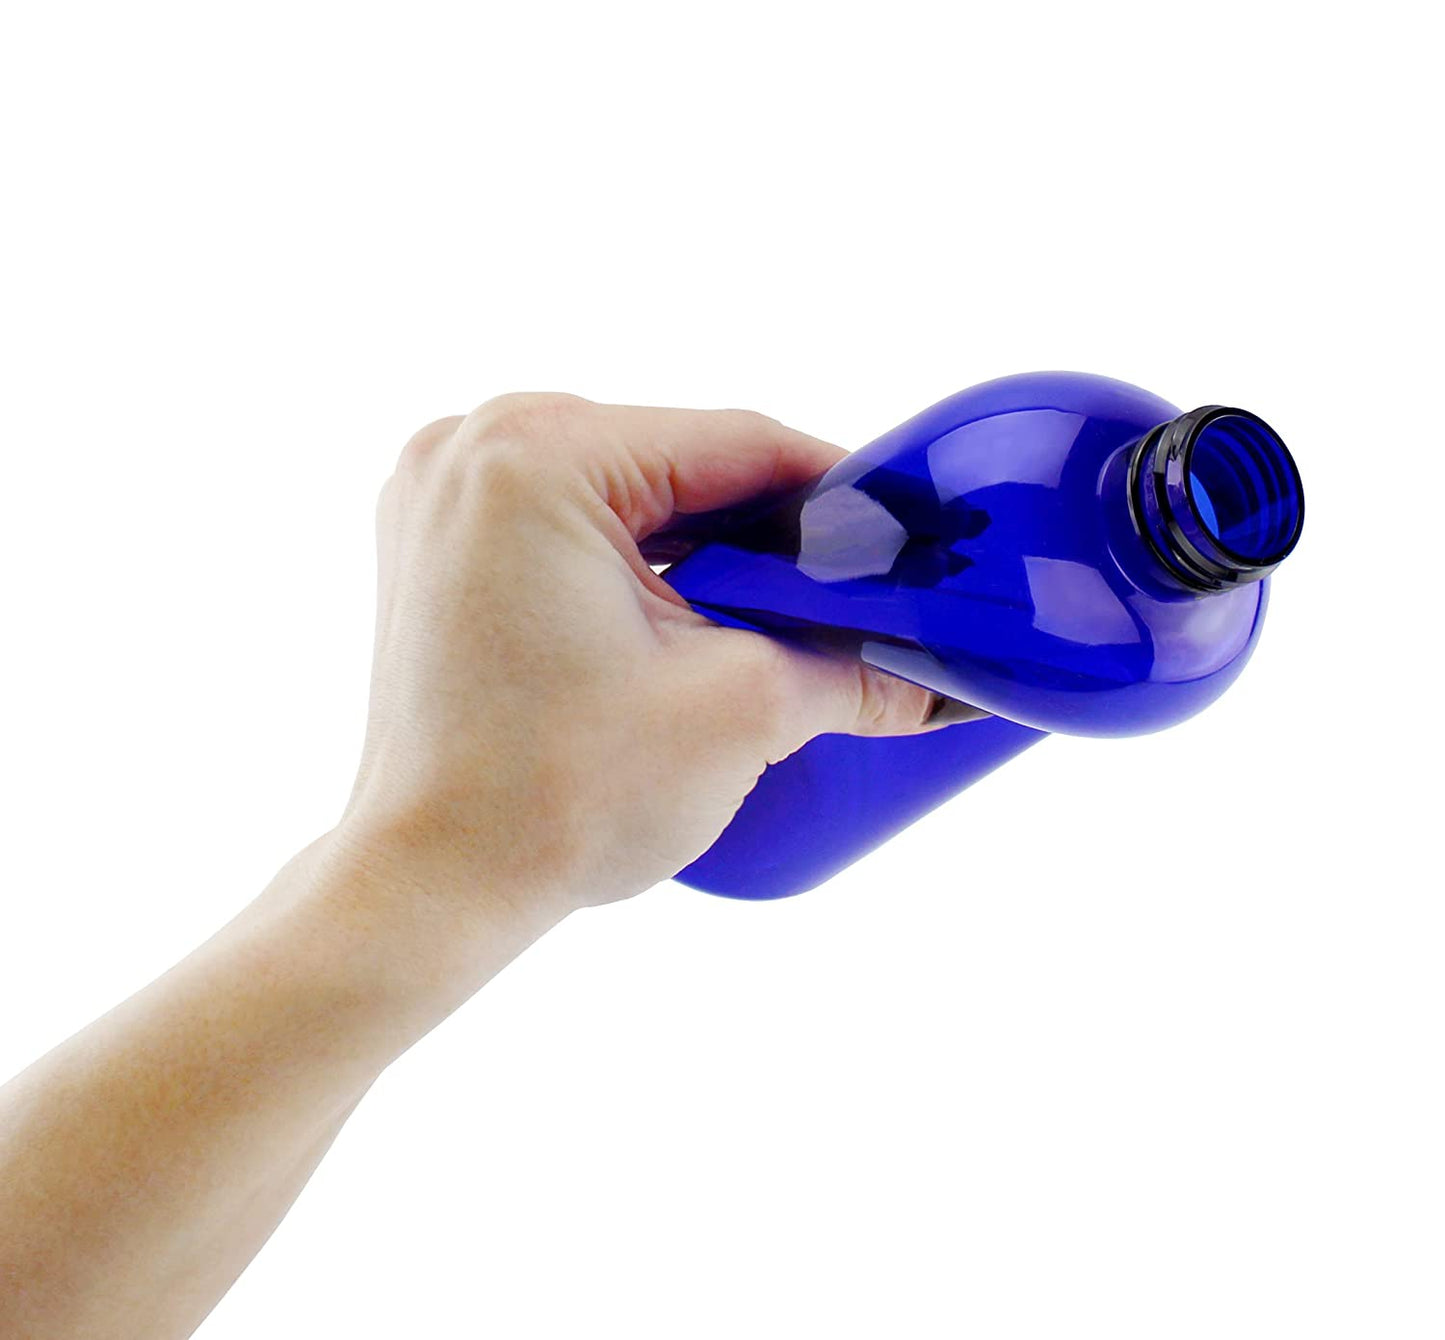 16oz Cobalt Blue PLASTIC Spray Bottles w/Heavy Duty Mist & Stream Sprayers (6-pack) - sh1269cb0mnw